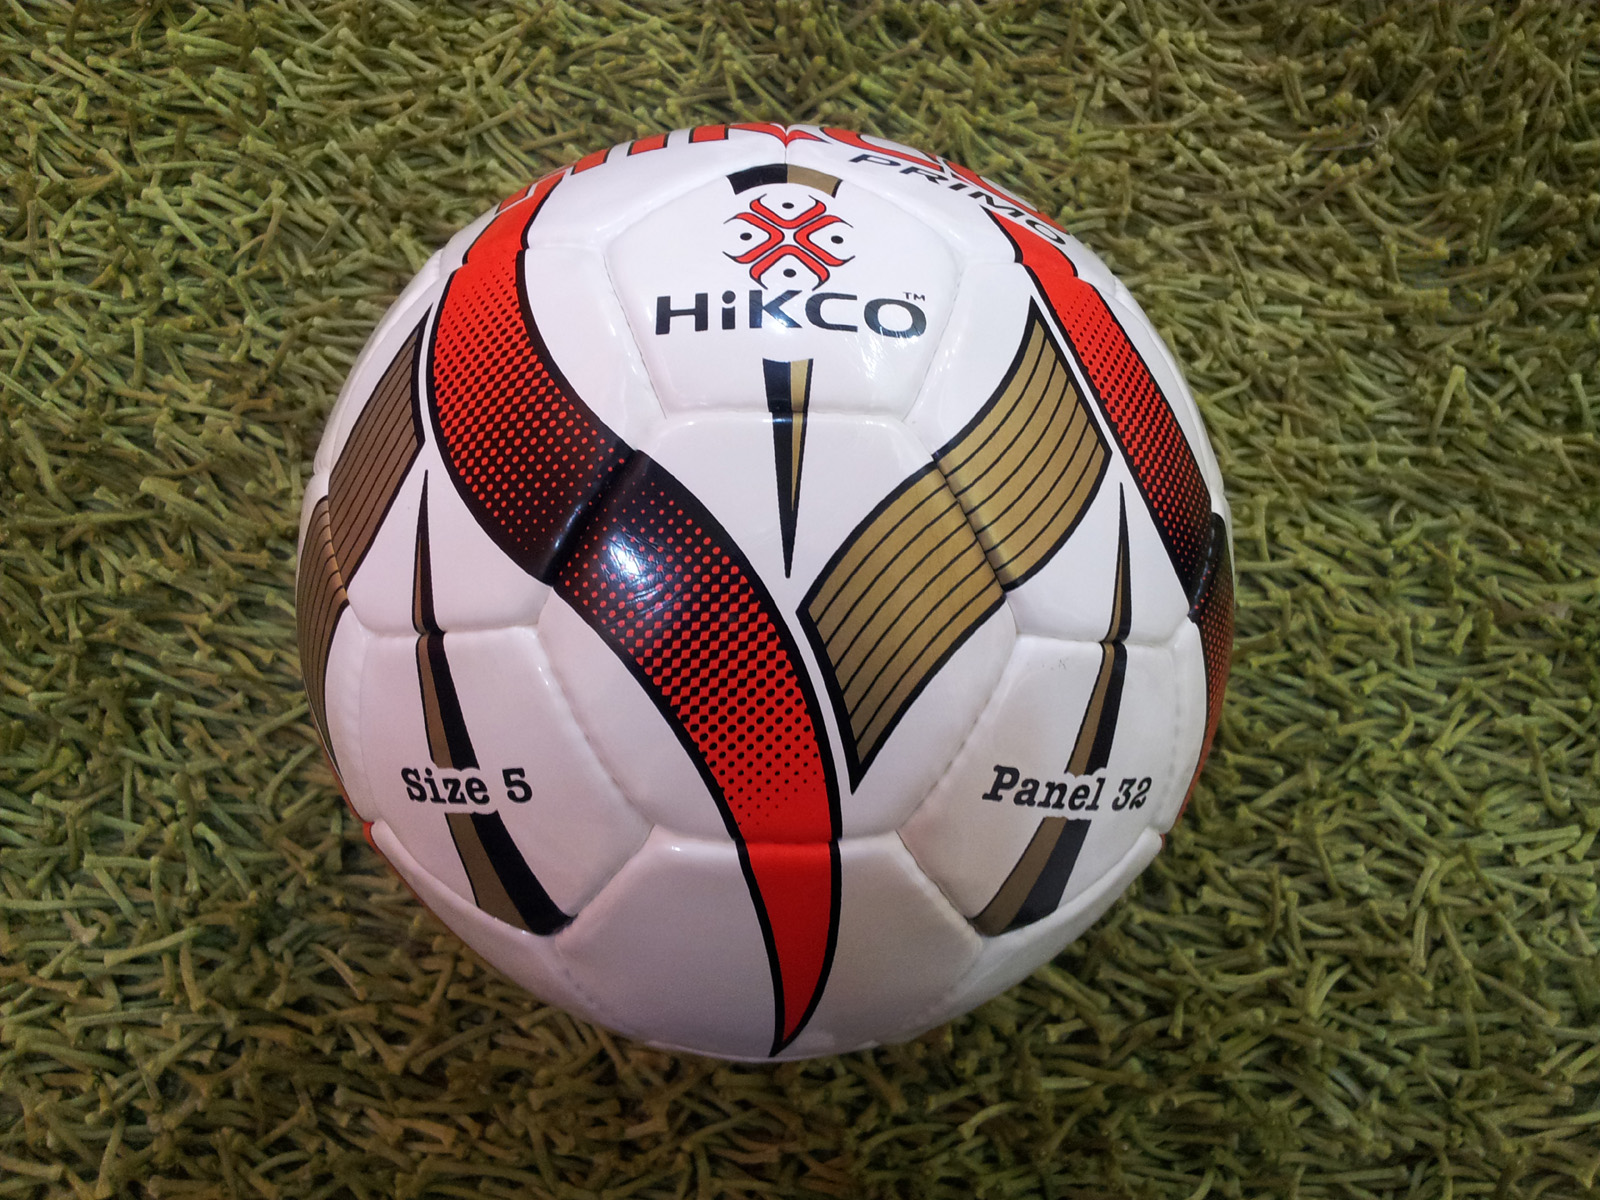 Hikco Primo Football Manufacturer Supplier Wholesale Exporter Importer Buyer Trader Retailer in JALANDHAR Punjab India